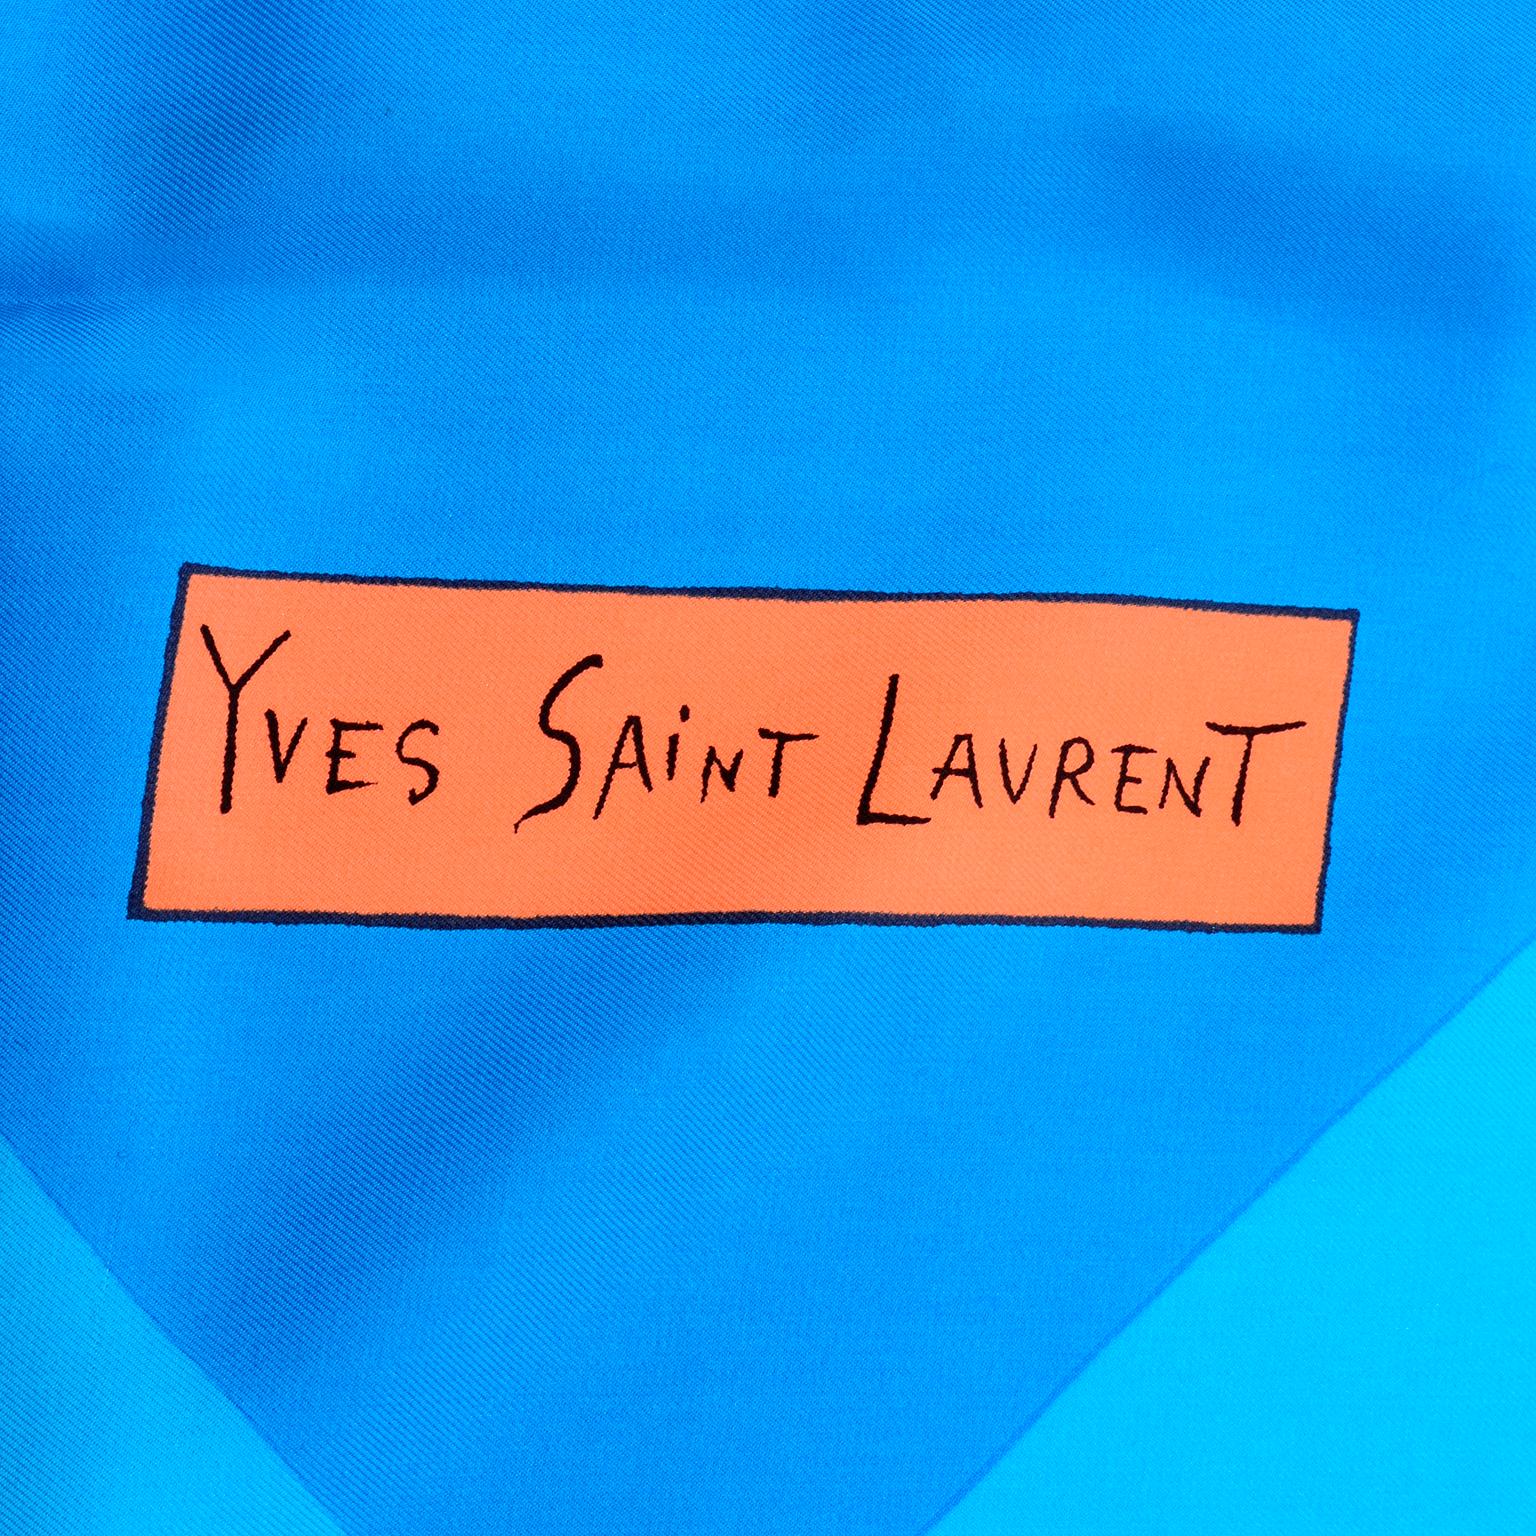 YSL Yves Saint Laurent Vintage Silk Scarf in Bold Colorful Blue & Orange Print 2